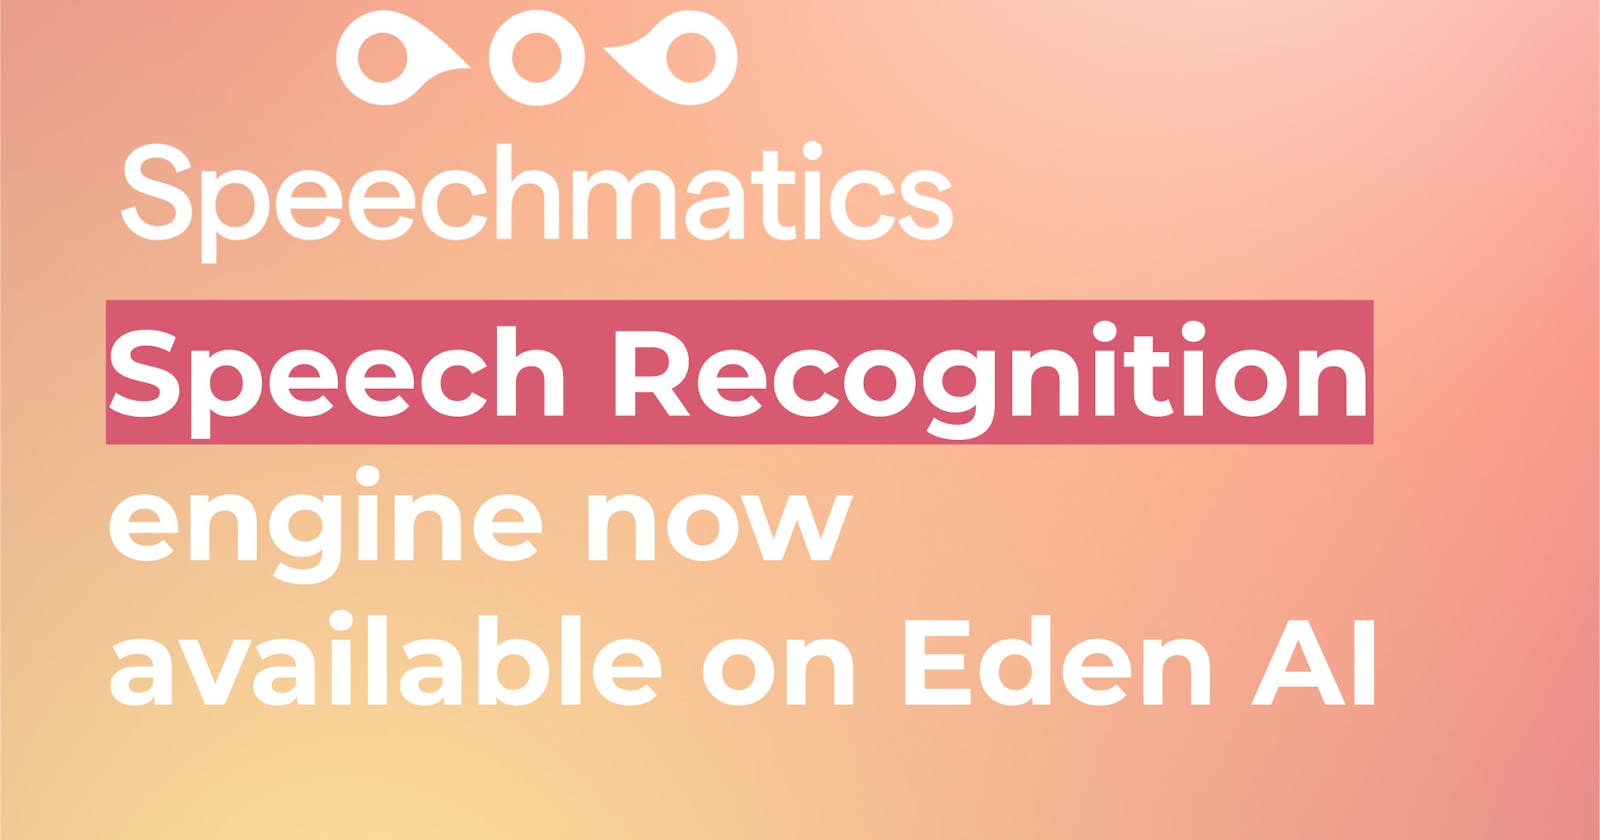 Speechmatics speech recognition API is available on Eden AI